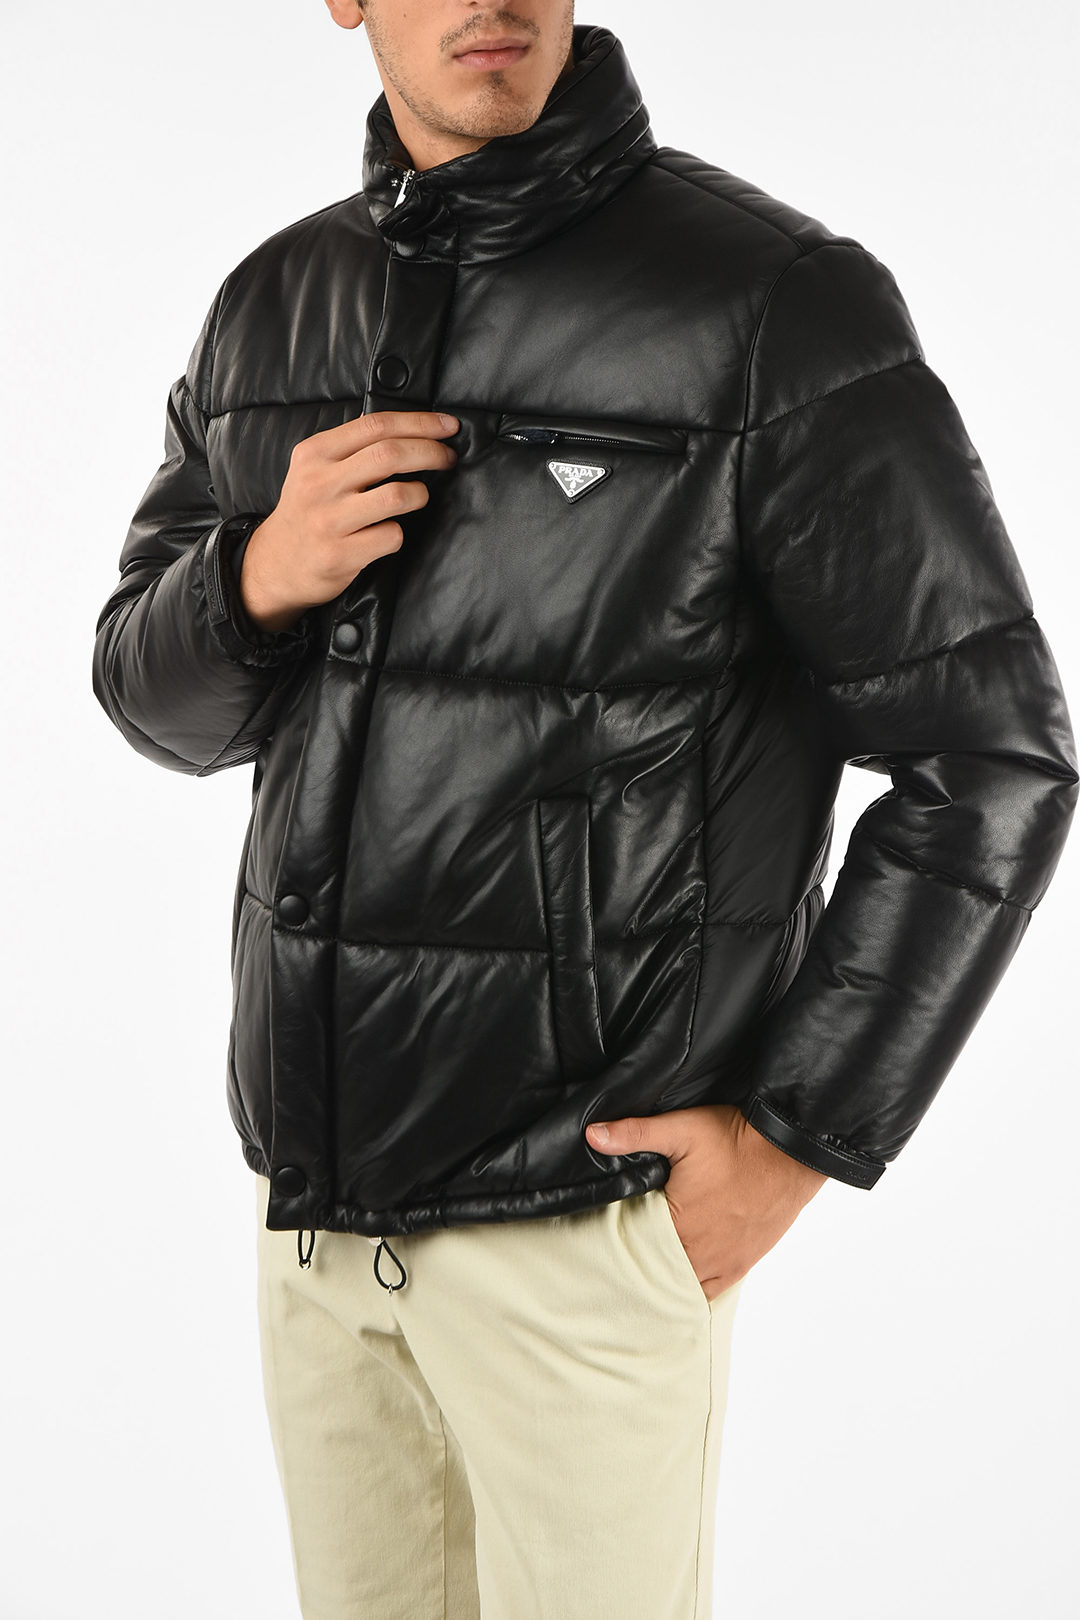 Introducir 55+ imagen prada leather jacket mens - Viaterra.mx